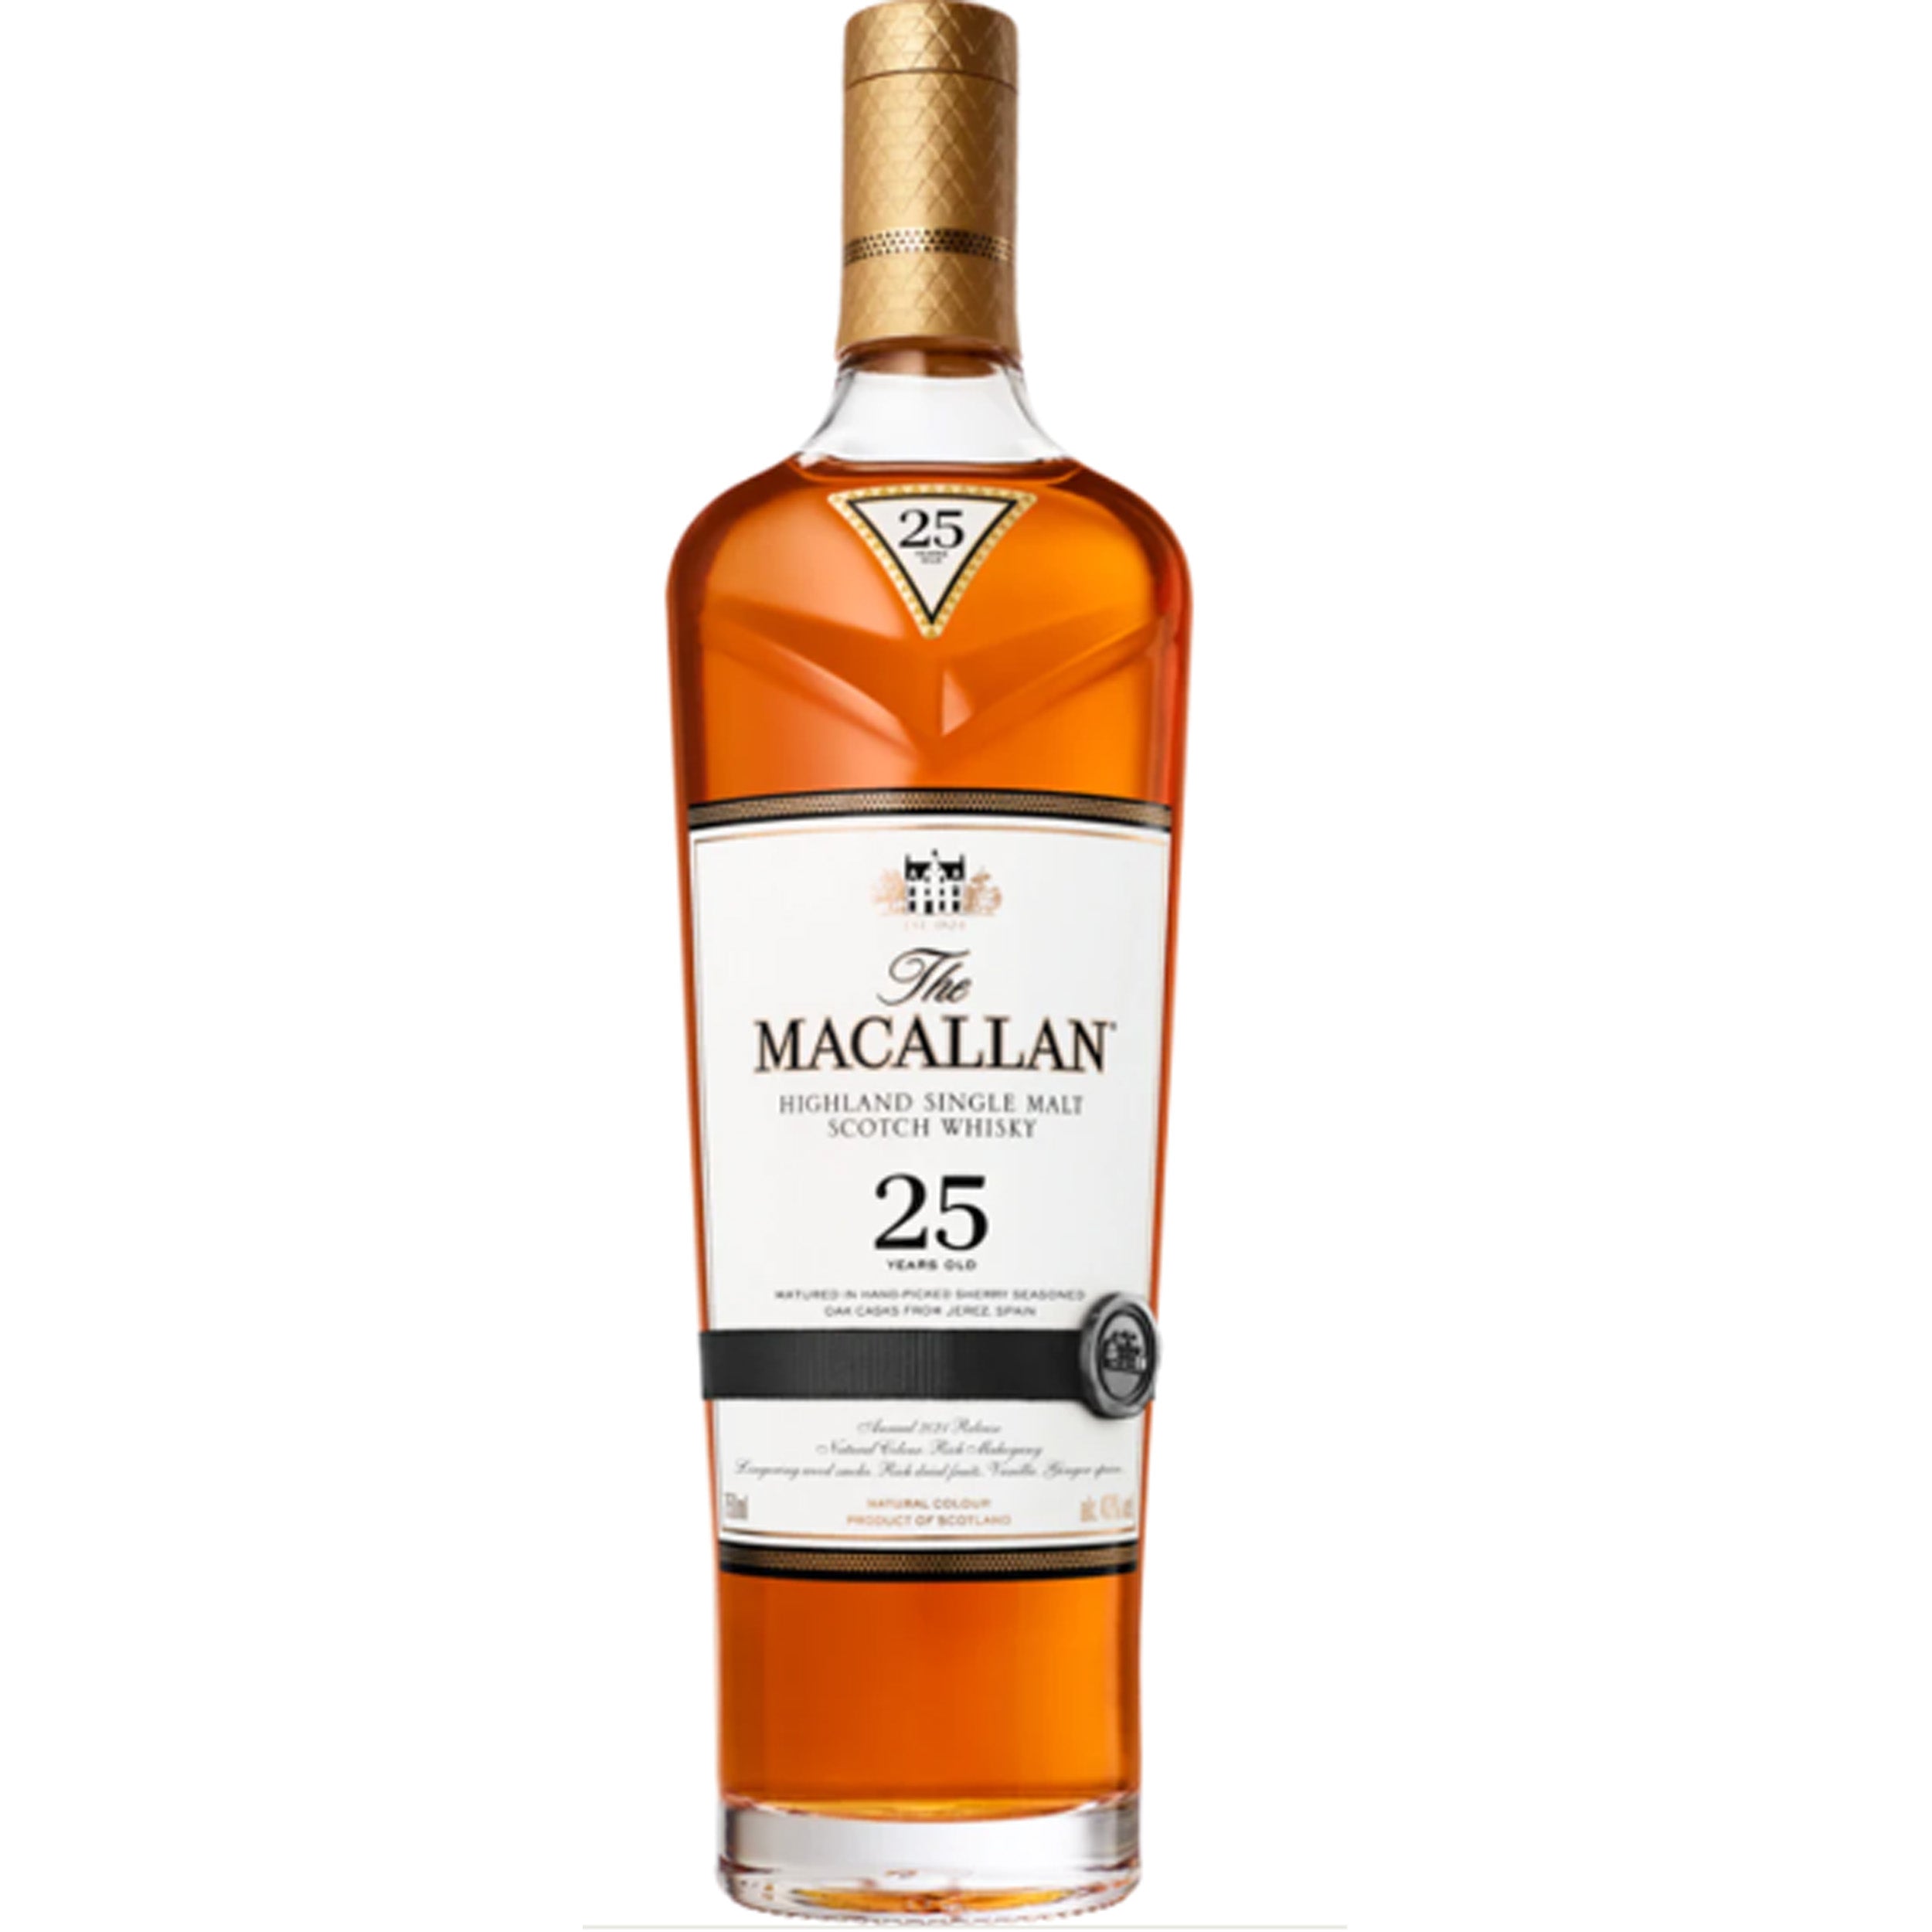 The Macallan 25 Year Old Single Malt Scotch Whisky